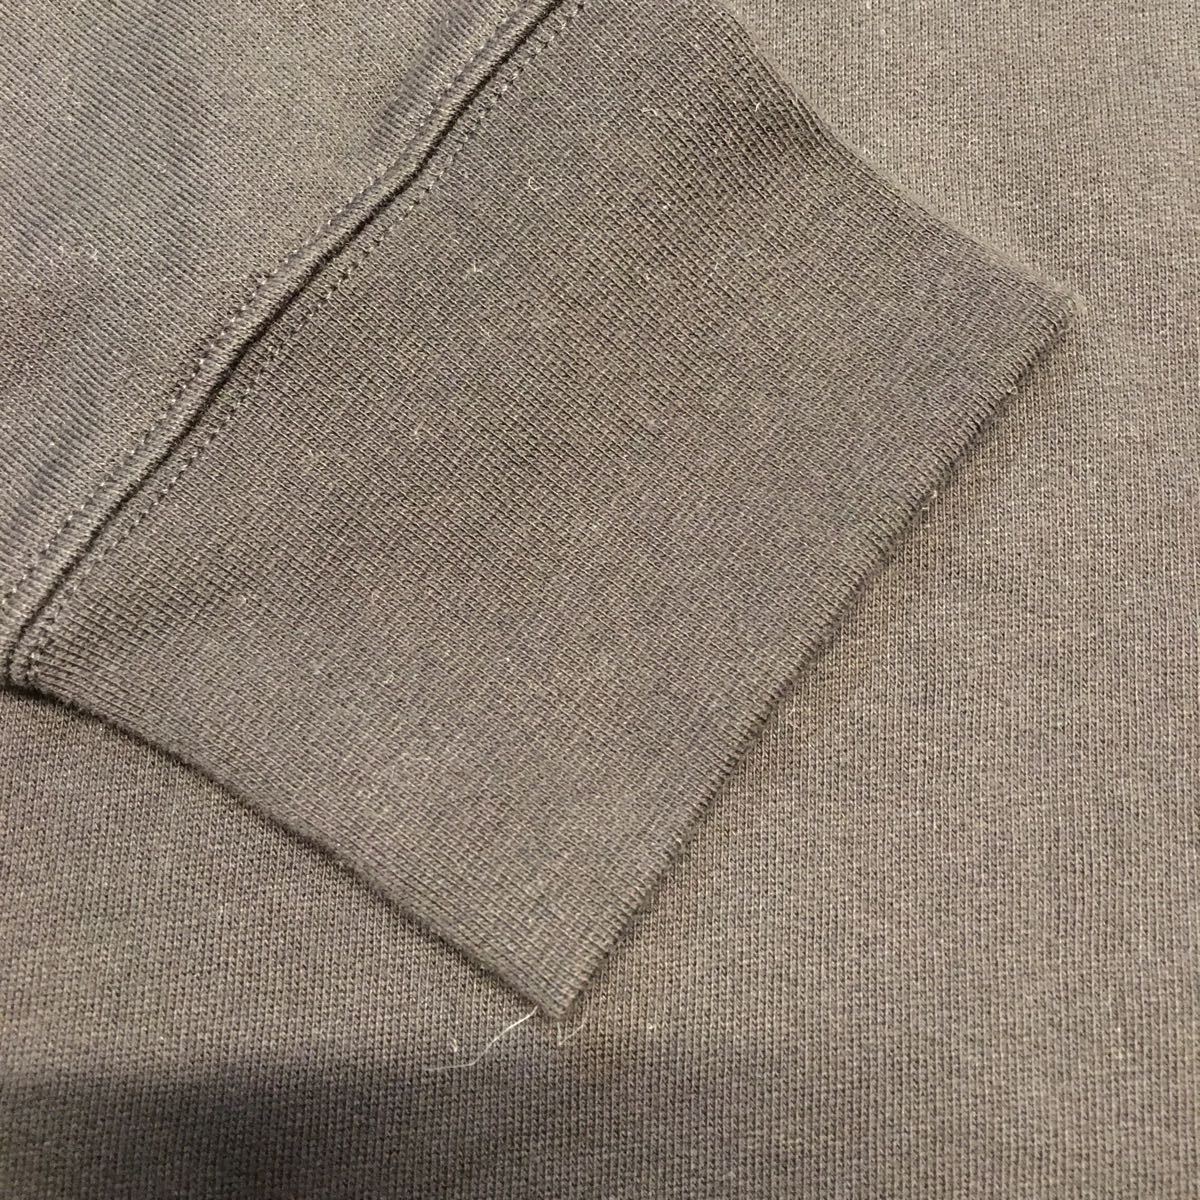  new goods tag attaching! Acne Studios Acne s Today oz both side Zip sweat sweatshirt sweatshirt black size XL rare!